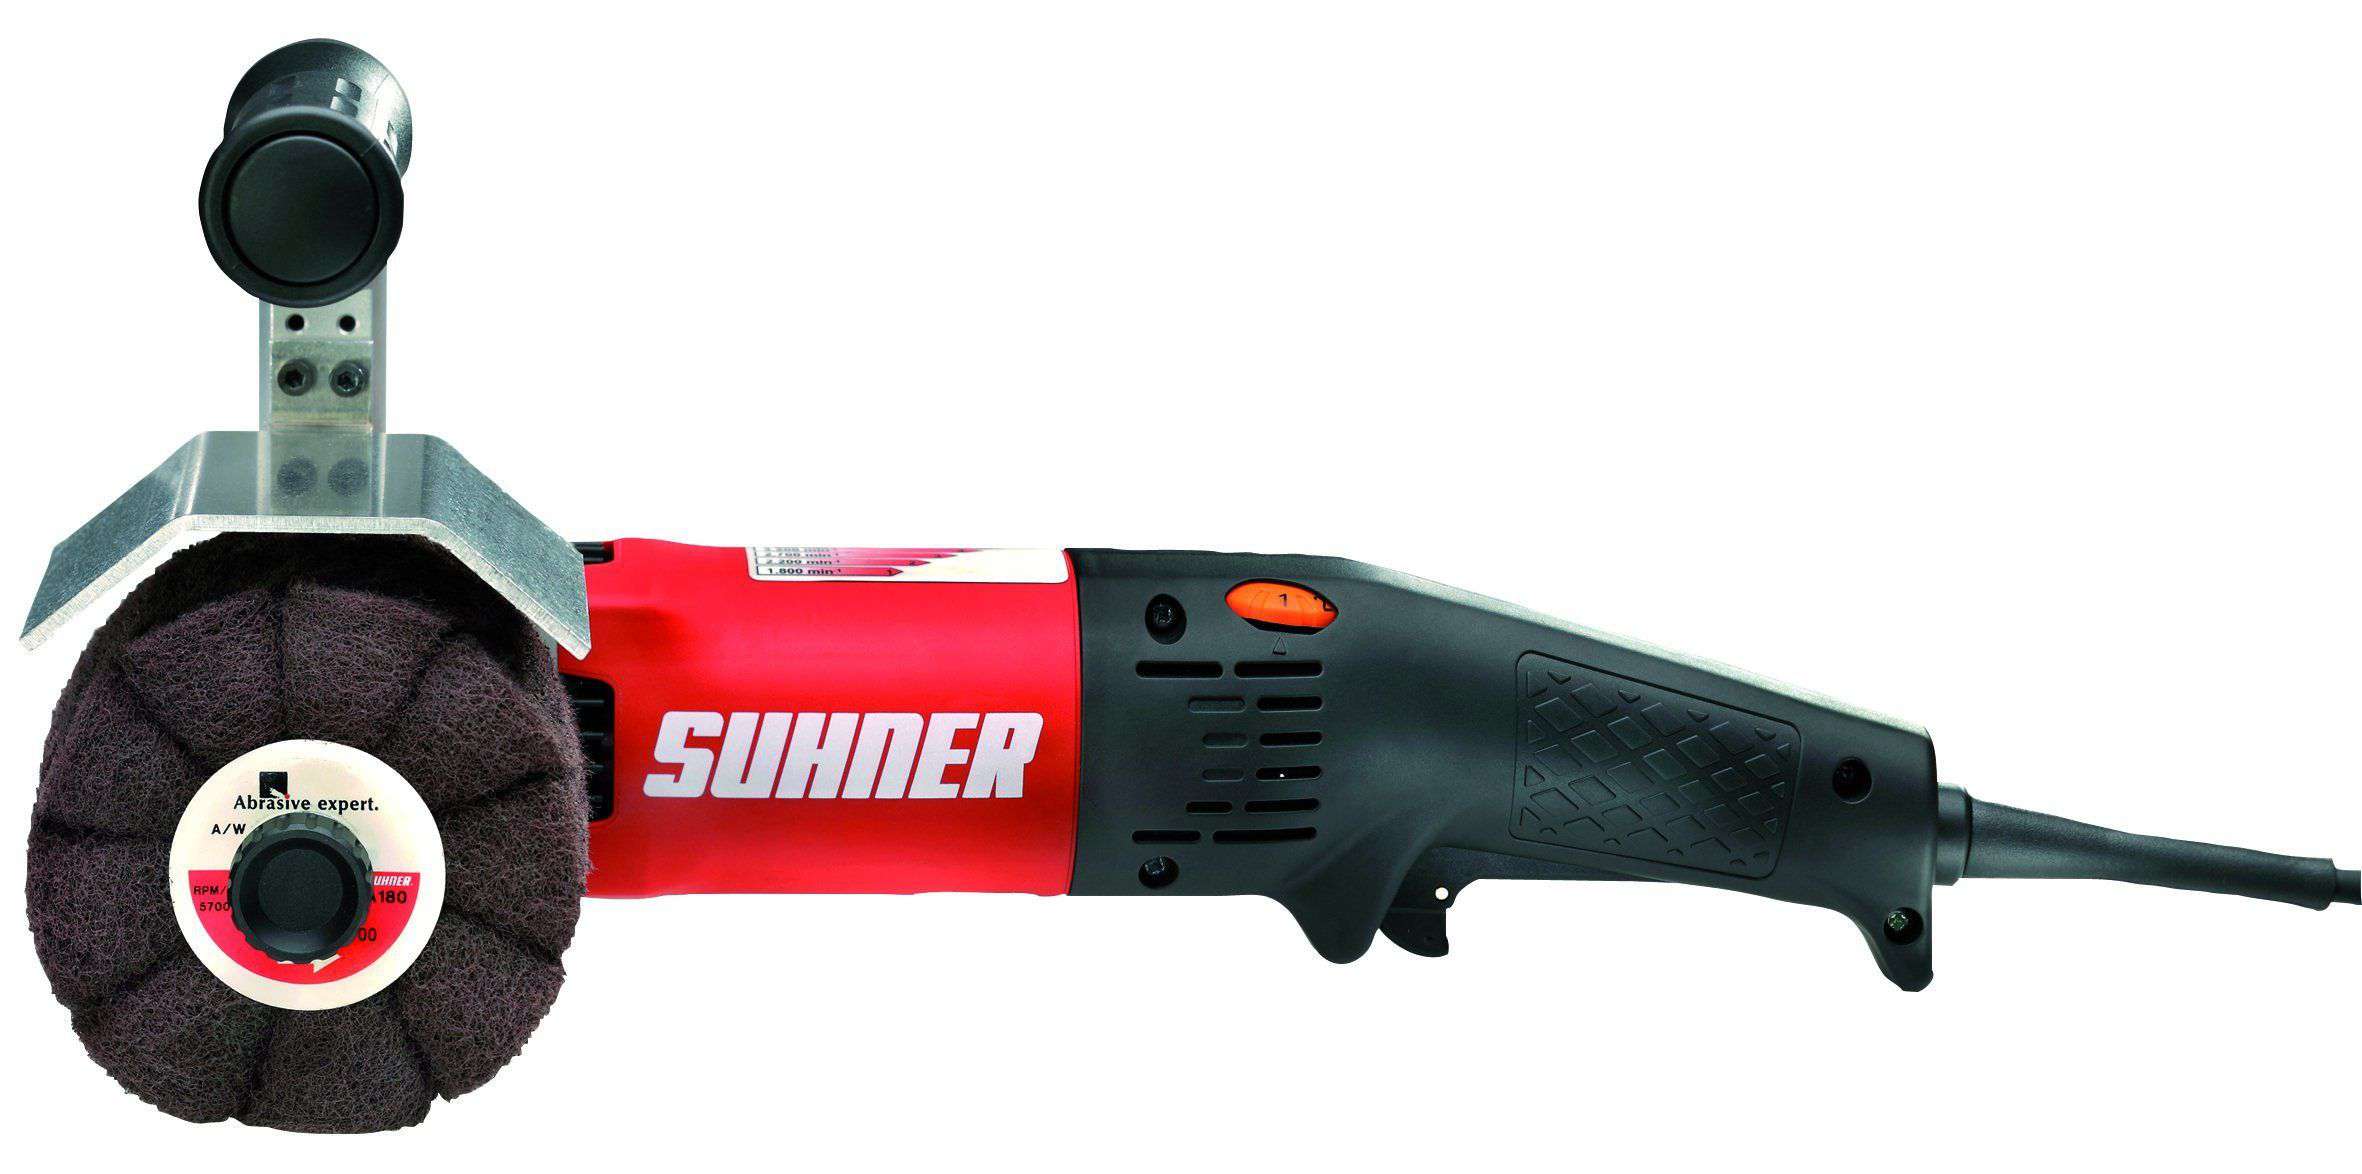 Suhner UPK 5-R Angle Polisher, America, 4-1/2" Diameter, 1800-4000 RPM - 120V